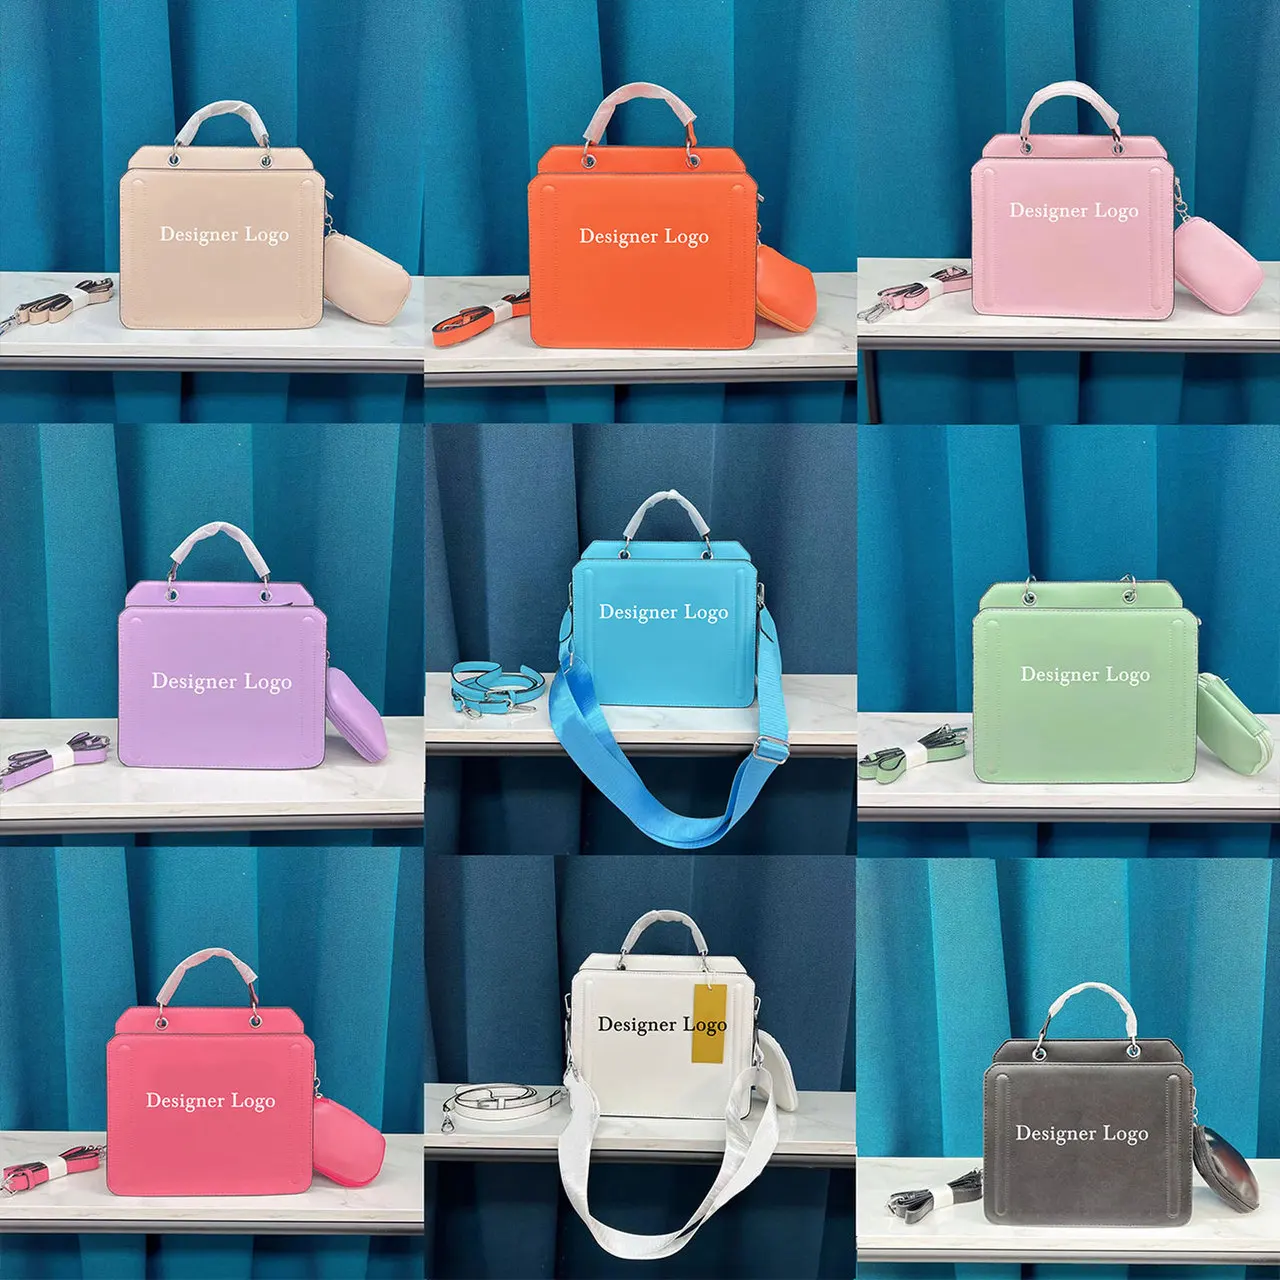 

New Arrival 2022 Fashion 1:1 Handbags Luxury Waterproof Designer Handbags Famous Brands Women Shoulder Bag, Picture shown